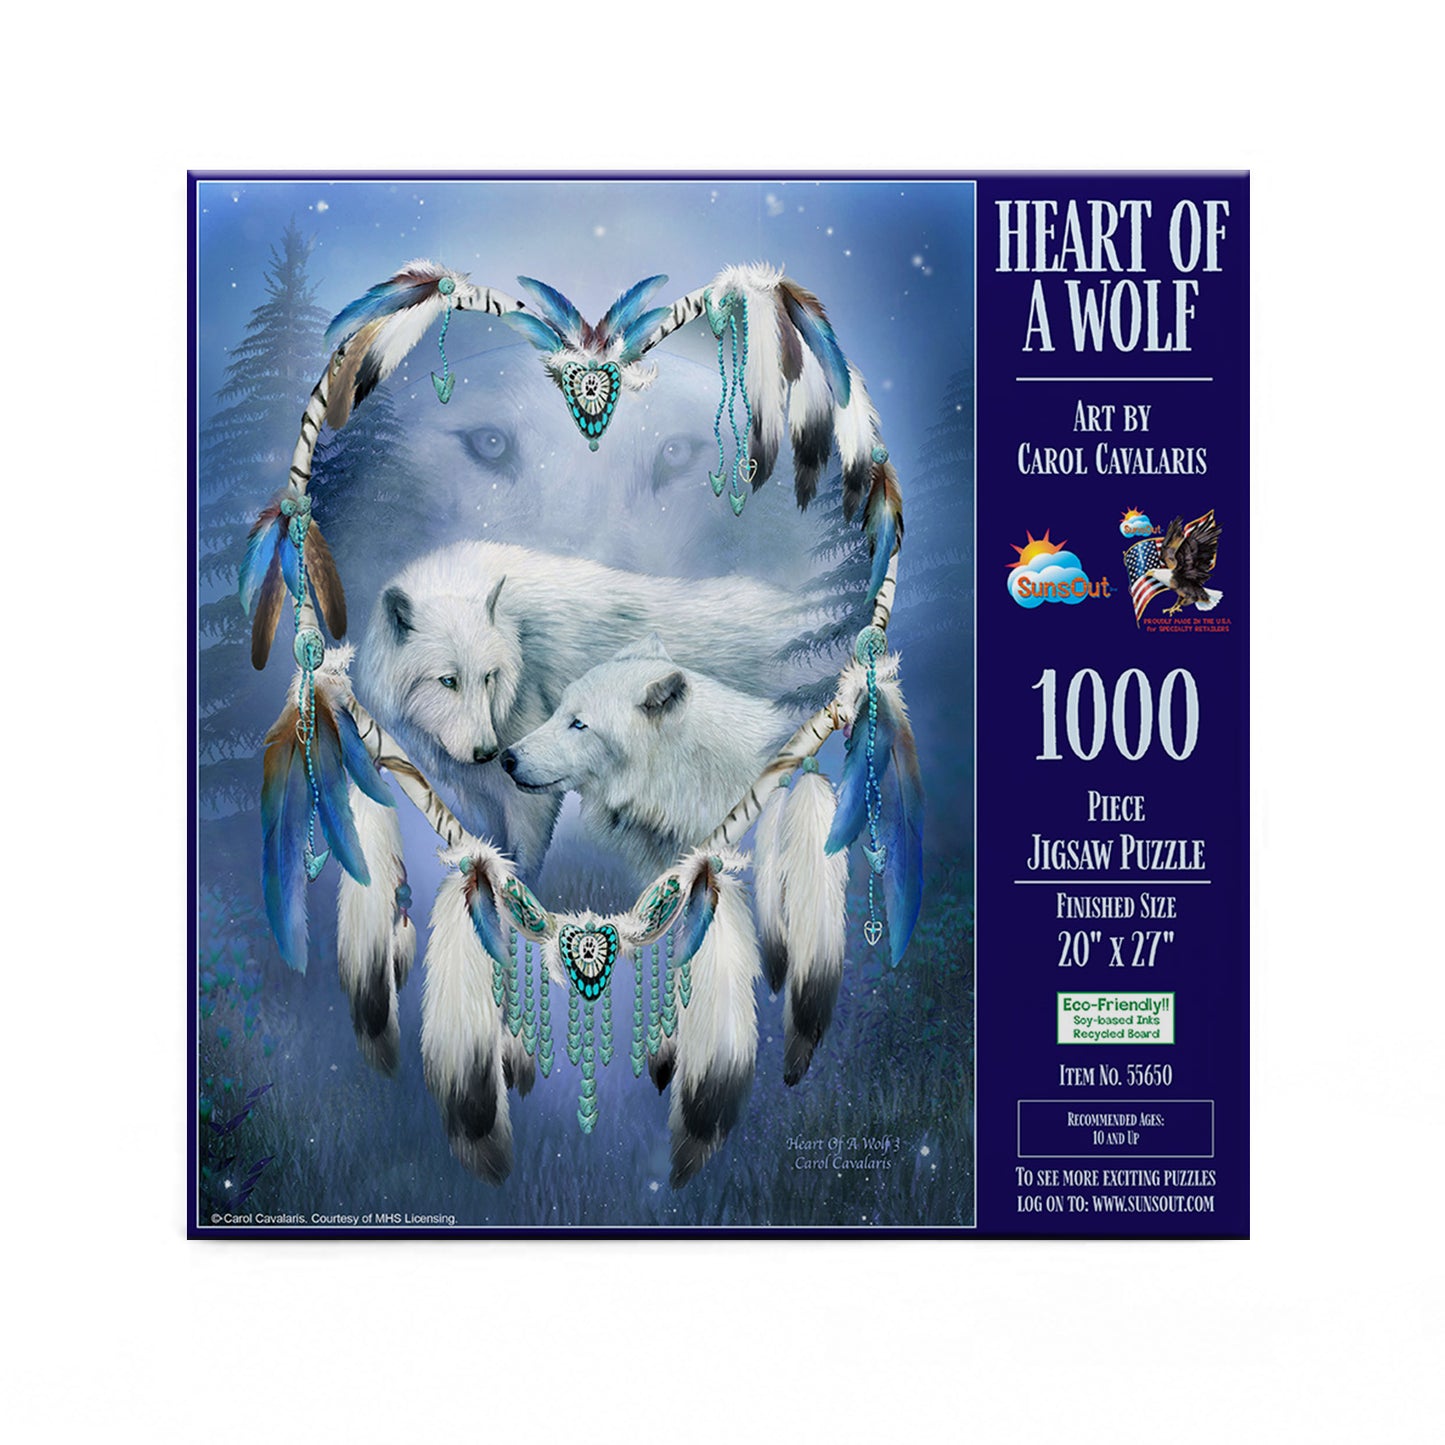 Heart of a Wolf by Carol Cavalaris, 1000 Jigsaw Puzzle